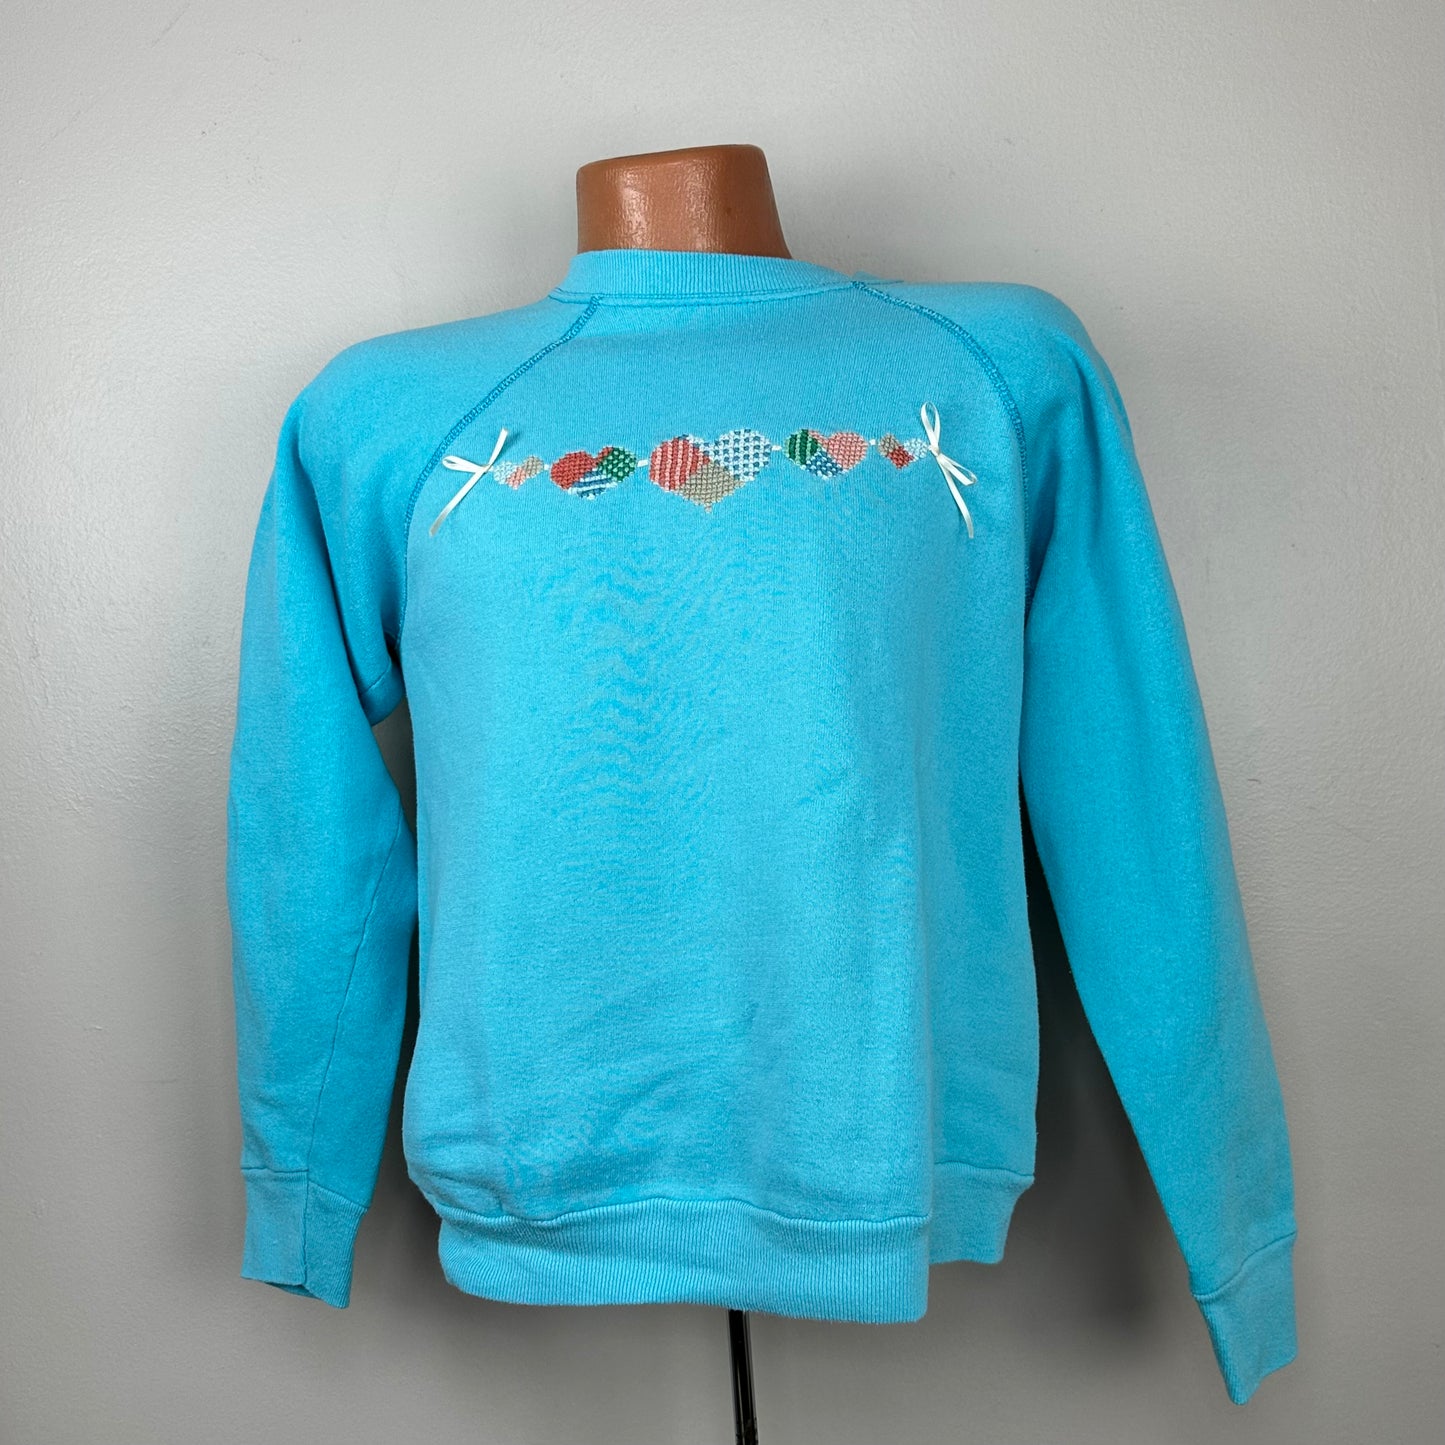 1980s Cross Stitched Sweatshirt, Hearts, Size Medium